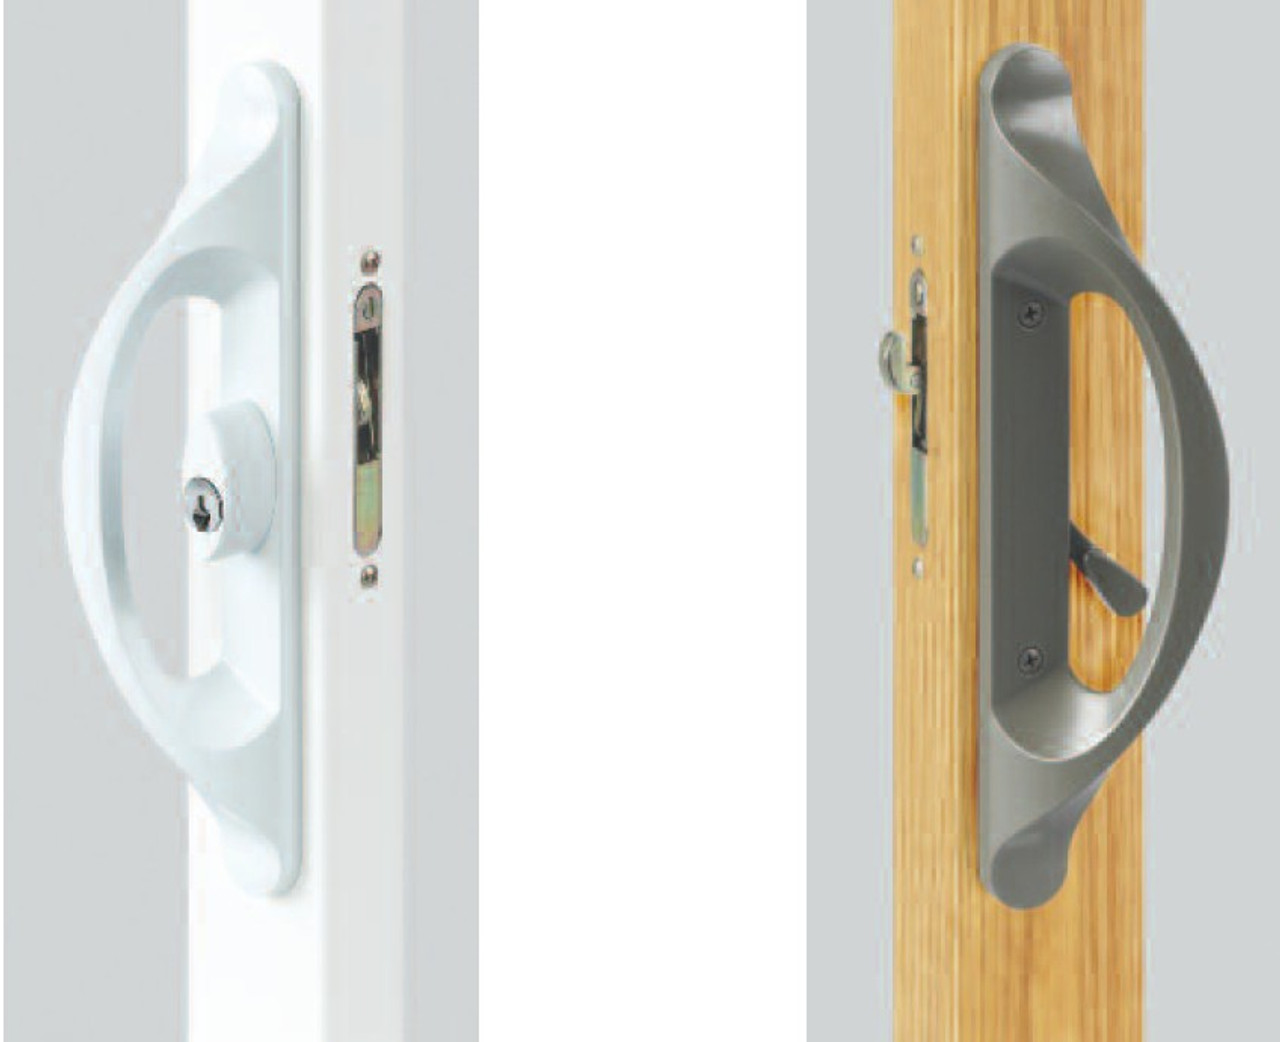 Windsor "ALLURE" sliding door handle set (none keyed) for Next Dimension vinyl sliding door (does lock from interior) Fits both wood and vinyl door